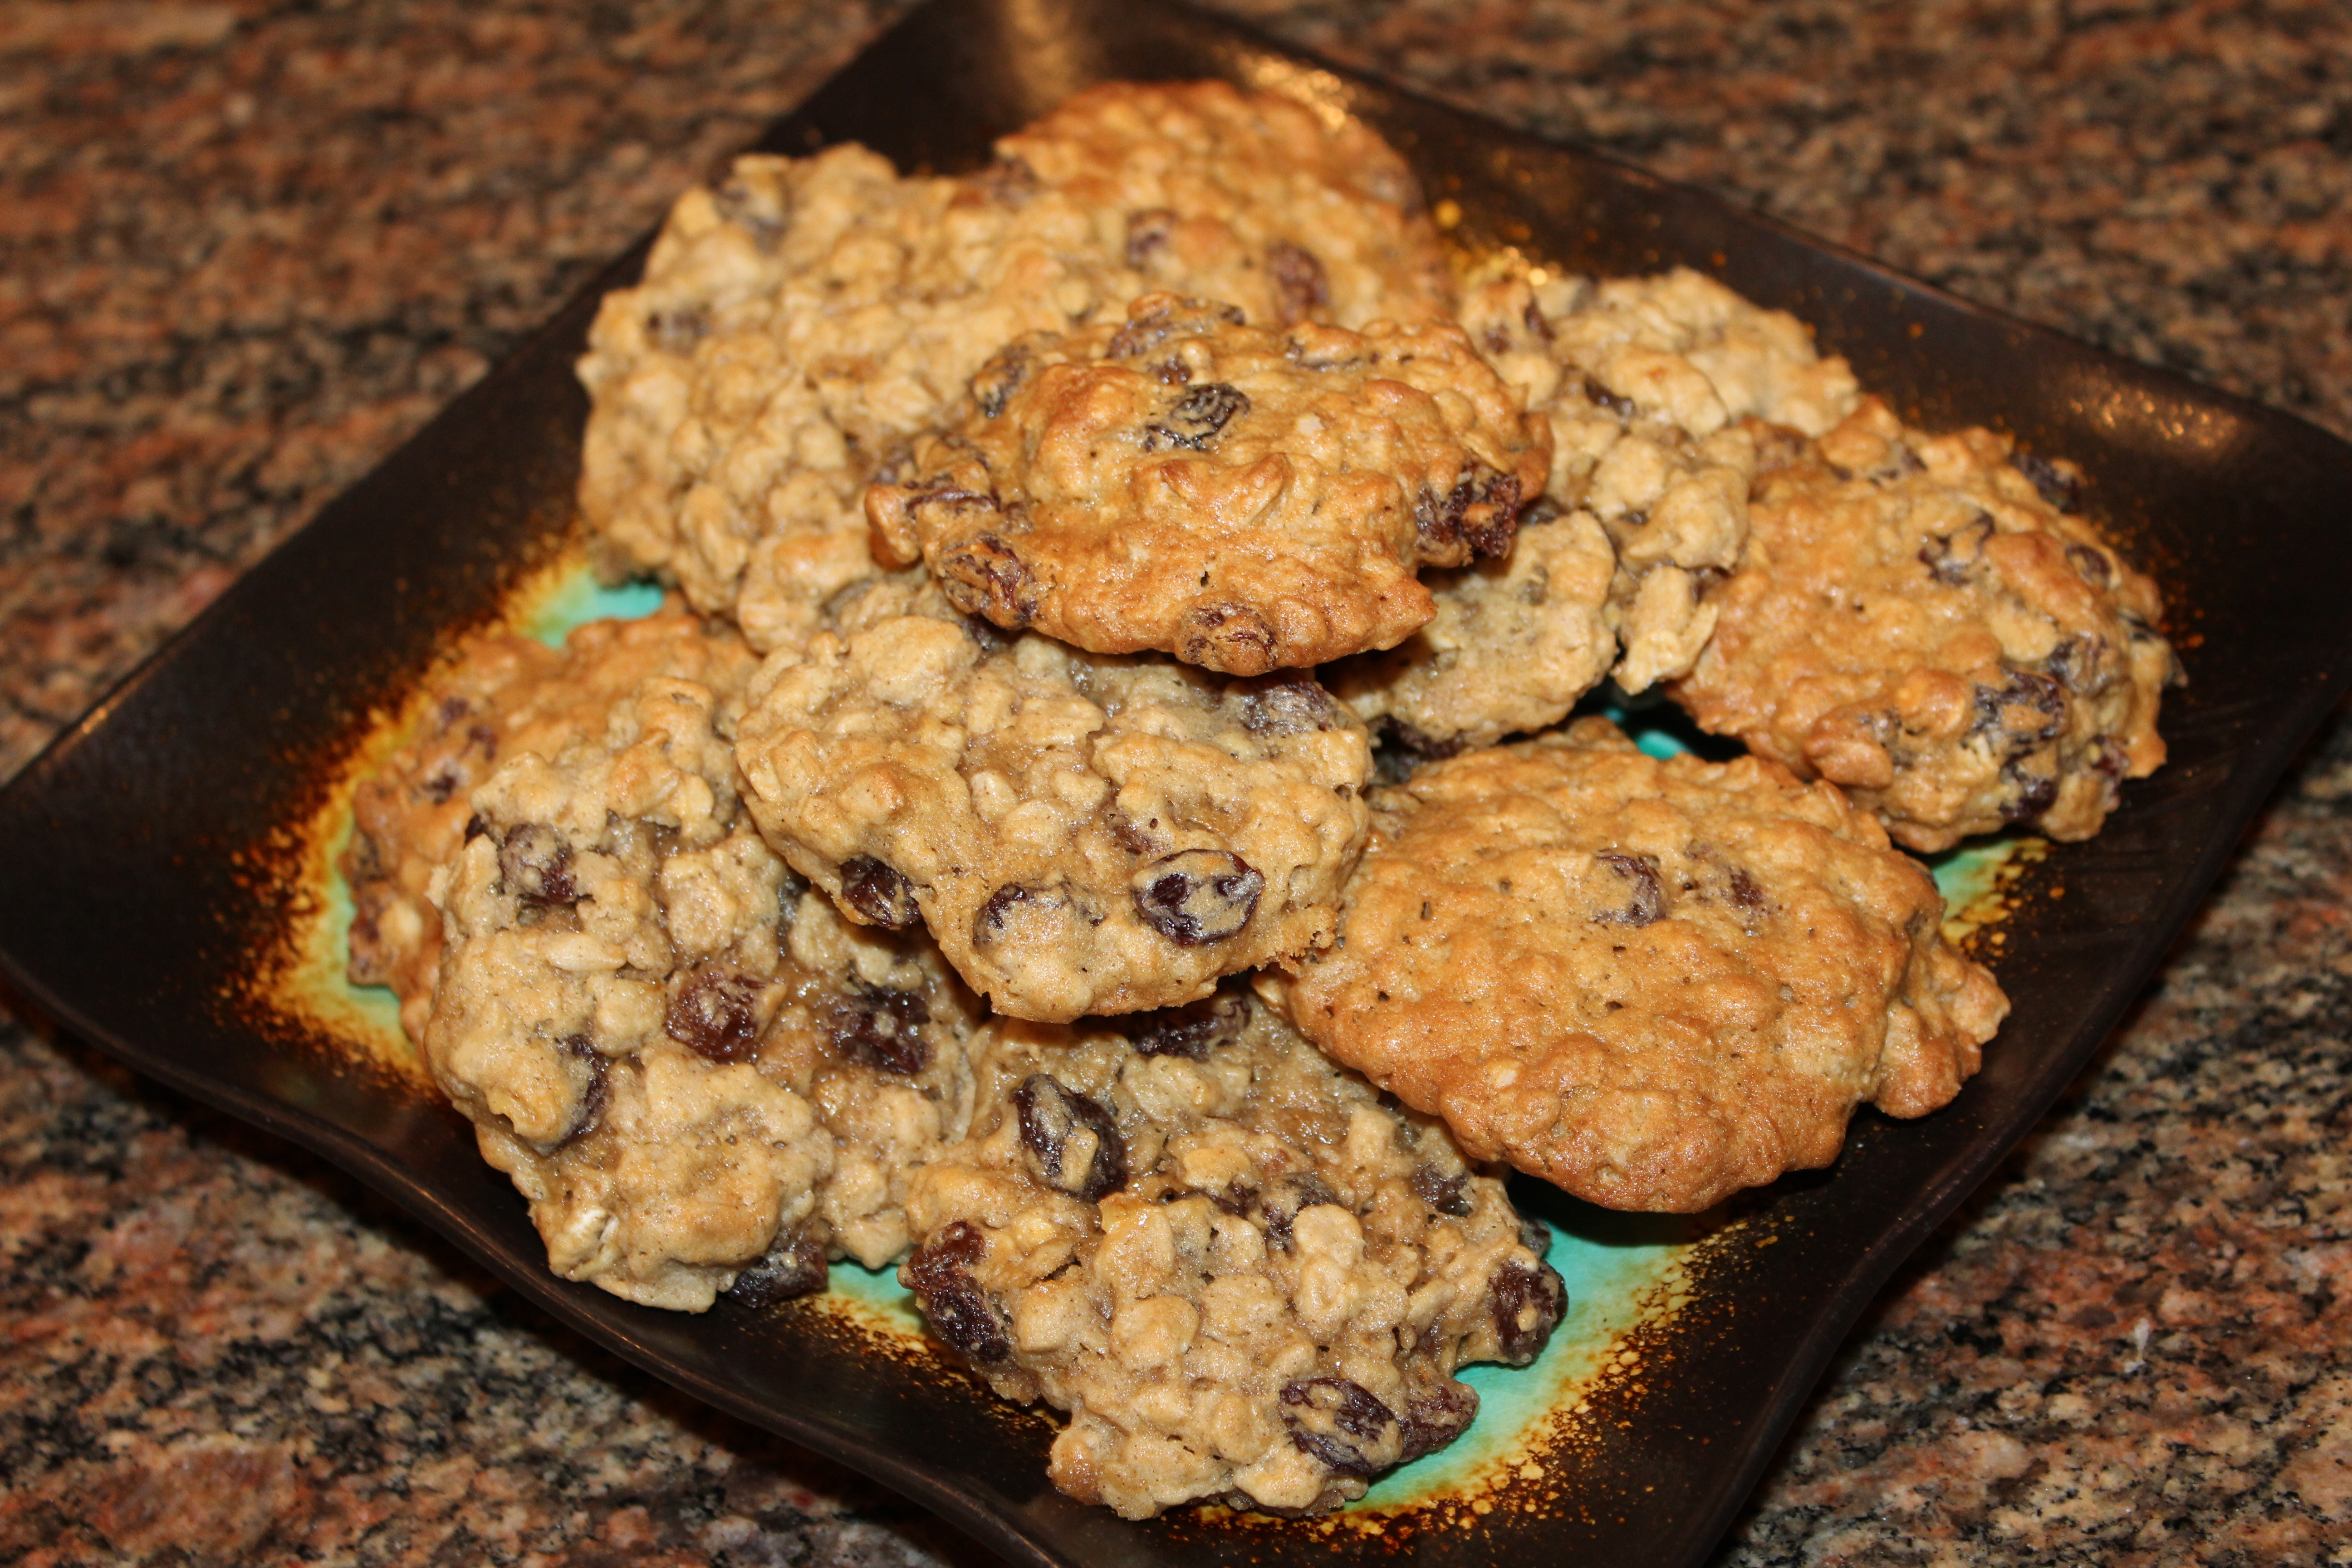 Kel's Oatmeal raisin cookies